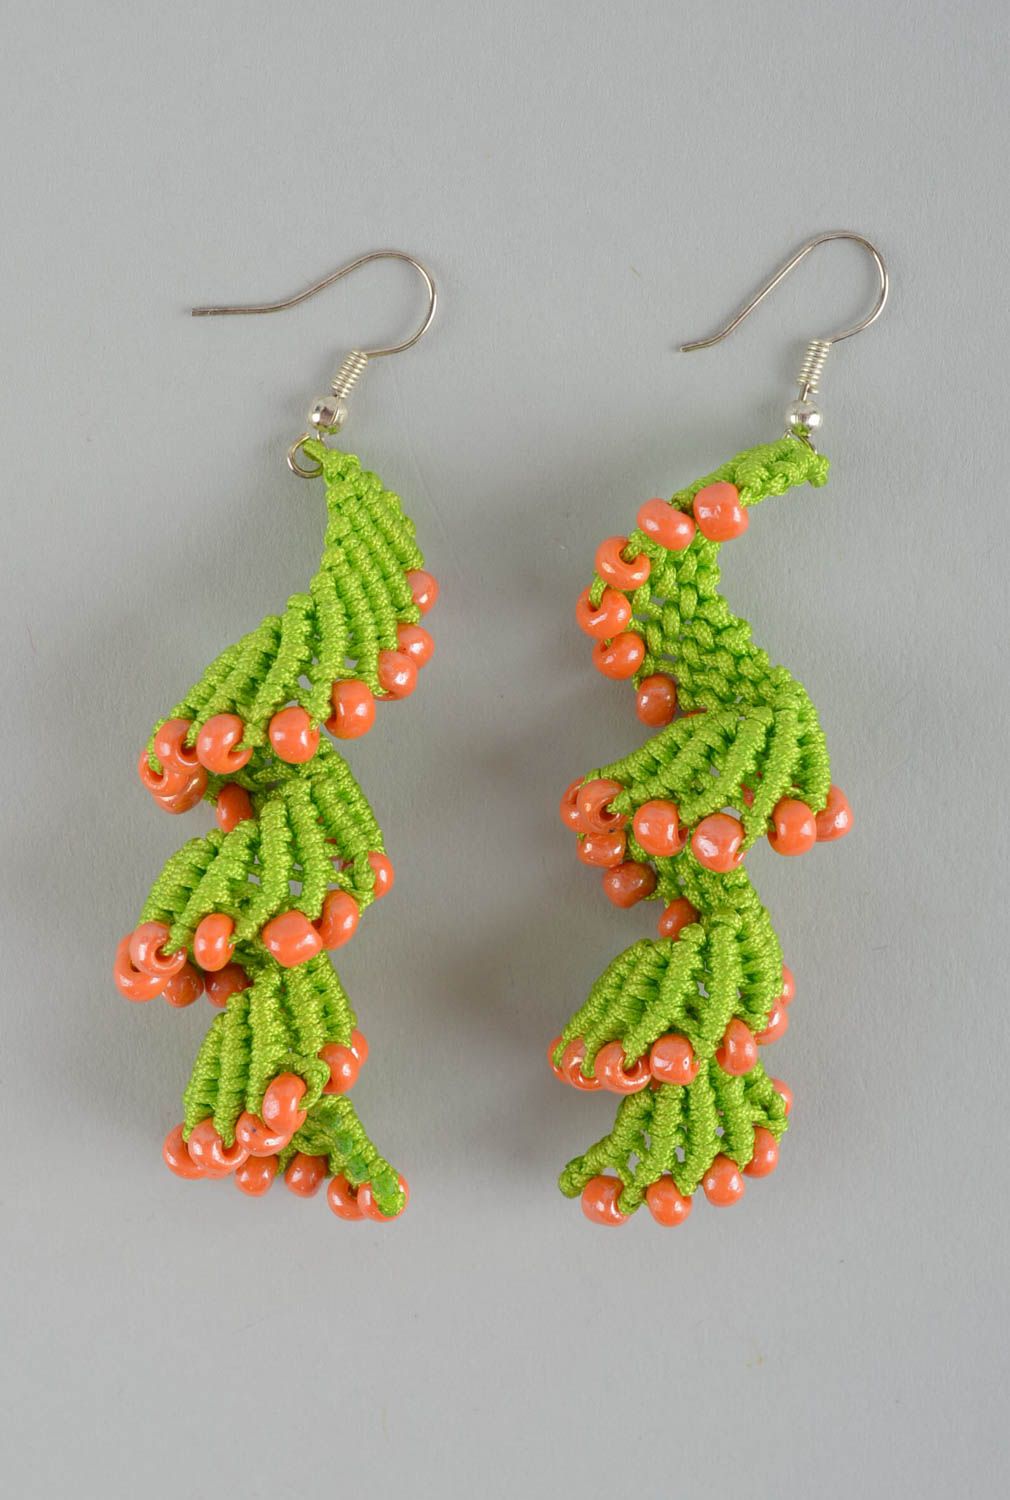 Handmade earrings designer jewelry unusual accessory knitted jewelry gift ideas photo 2